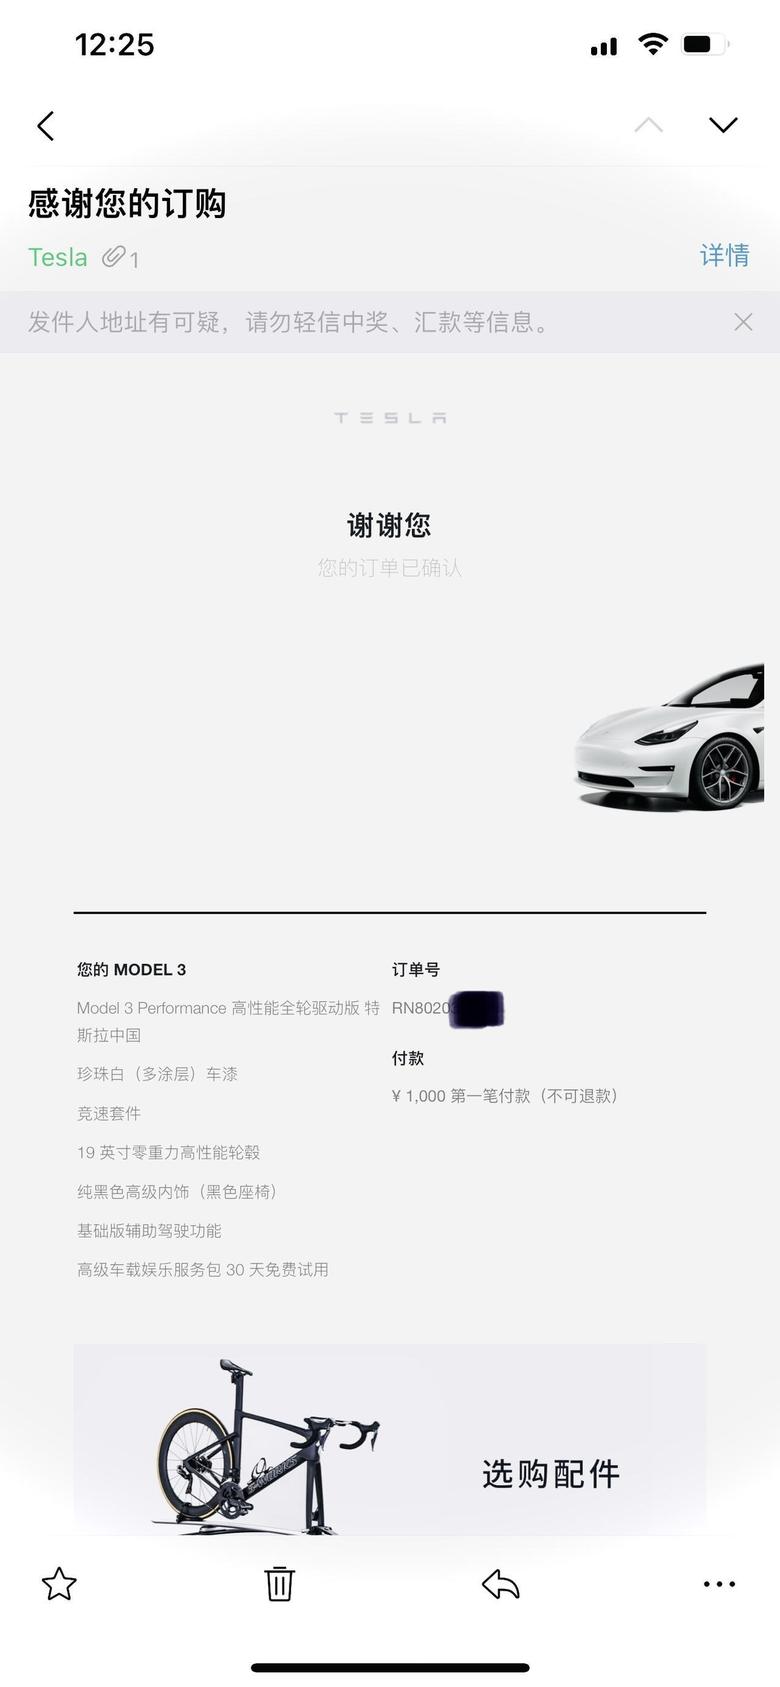 model 3 坐标北京，Macan换3P，今天下单，销售说这周末下单的年底前保证能交车，过了这周末就得明年了。